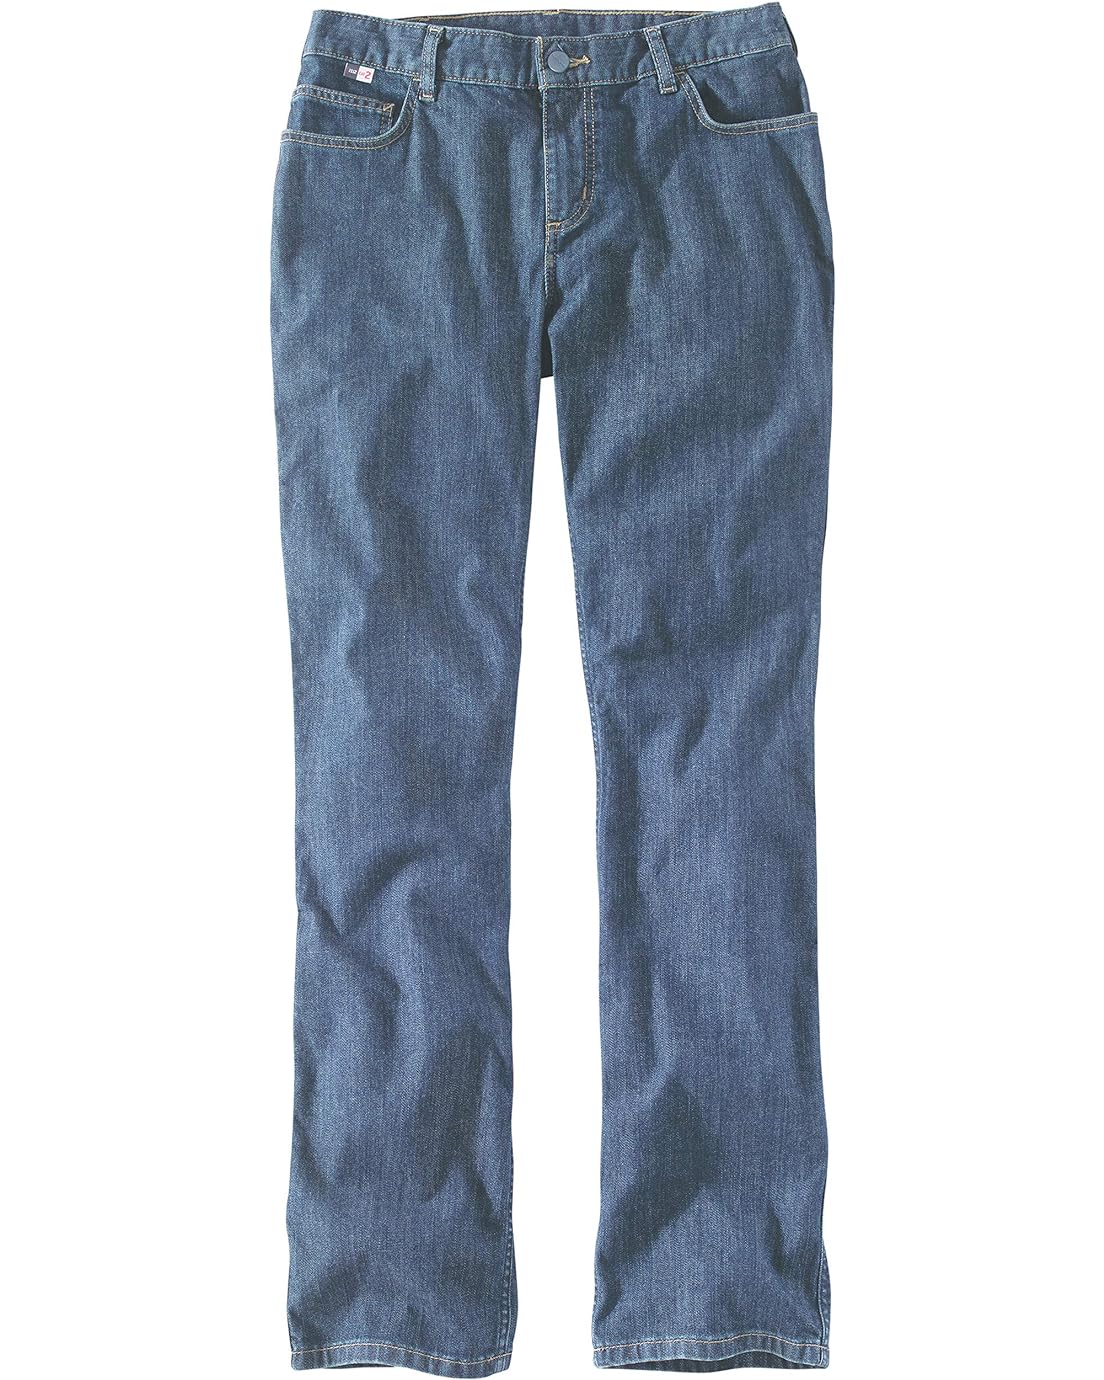 Carhartt Flame-Resistant Rugged Flex Jeans Original Fit